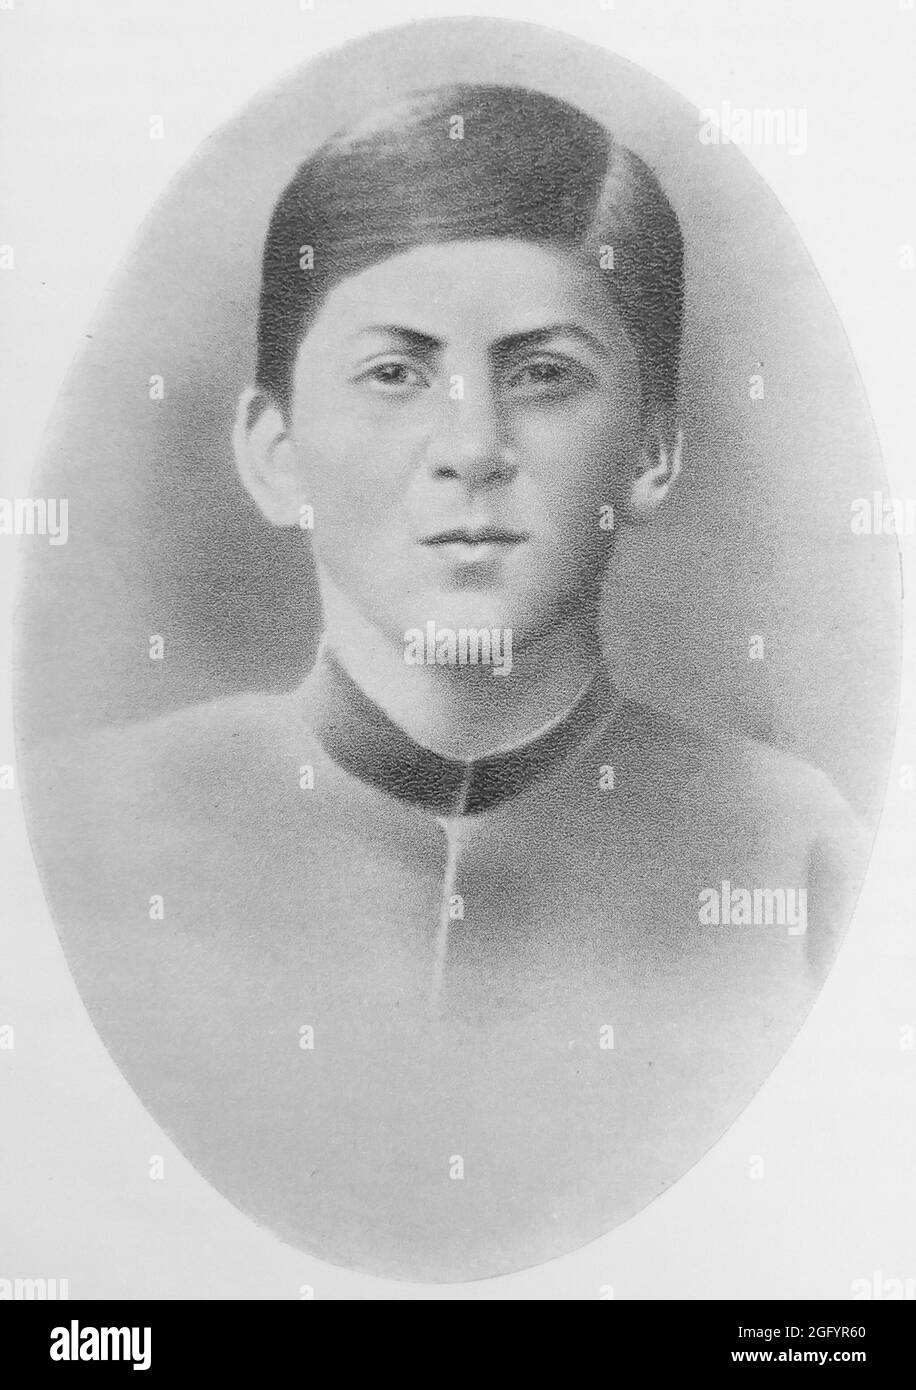 A portrait of Jospeh Stalin (real name Joseph Dzhugashvili) in 1893 - he was 15 years old and a pupil in Gori Church School, Gori, Georgia Stock Photo